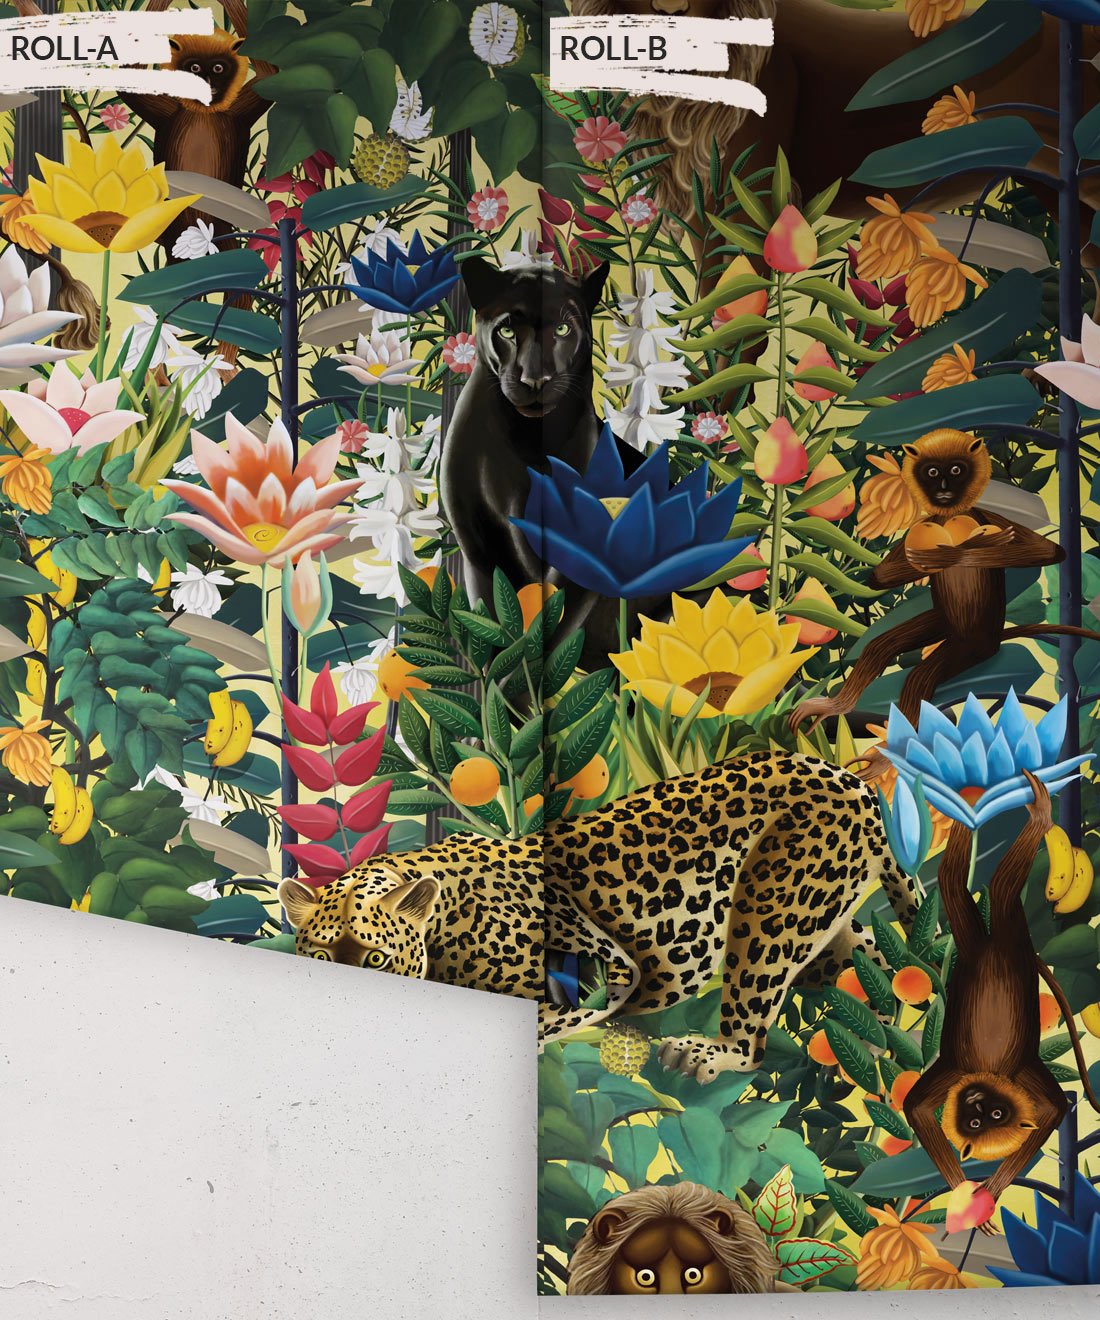 The Jungle Wallpaper • Animal Wallpaper • Botanical Wallpaper • Hazelwood Wallpaper • Rolls